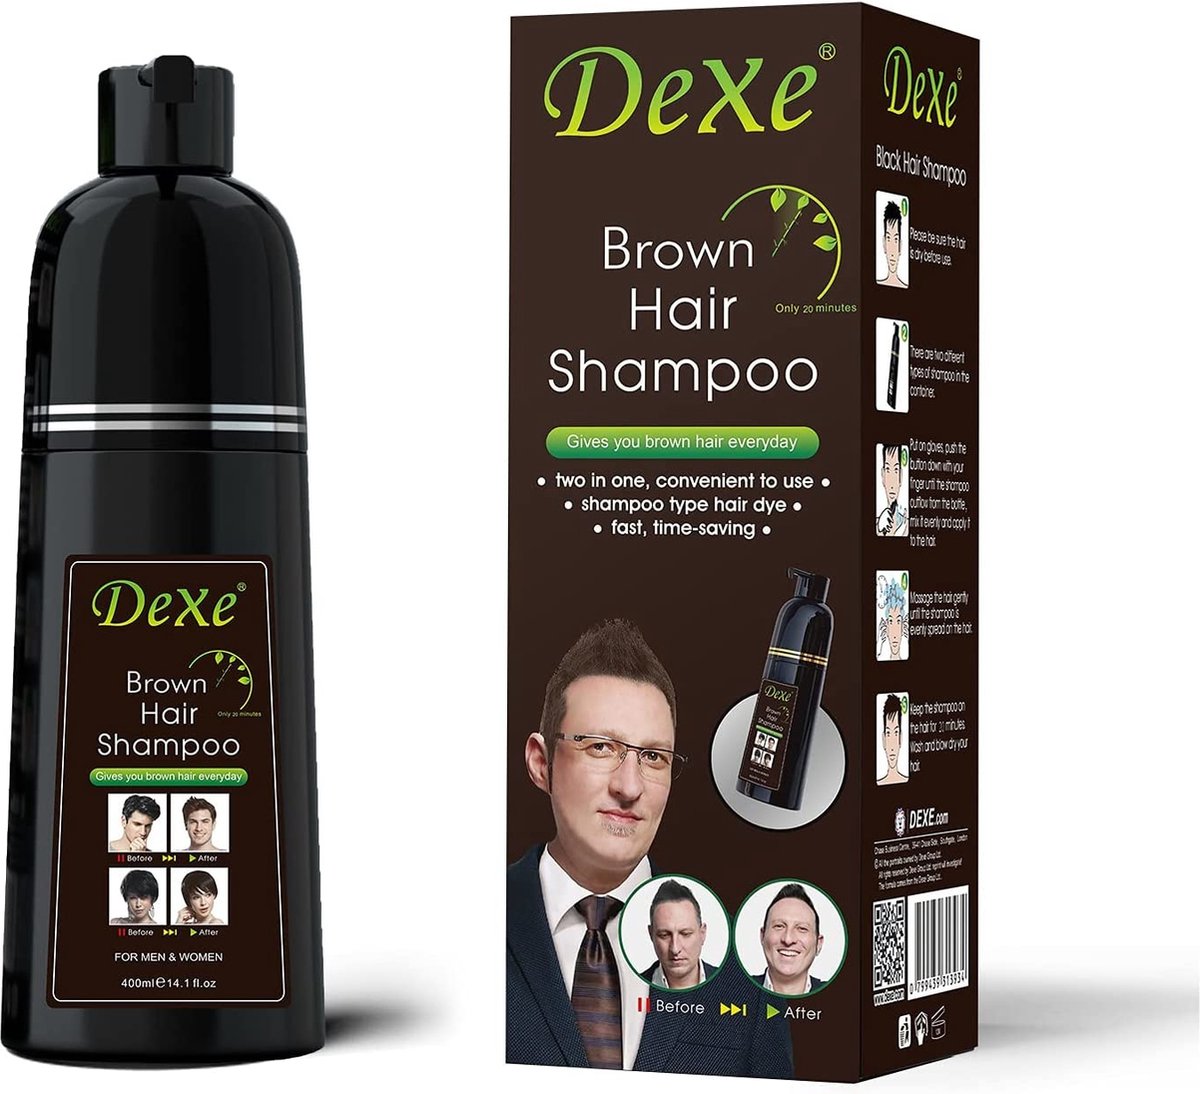 Dexe Brown Hair Shampoo Bottle (400ml)